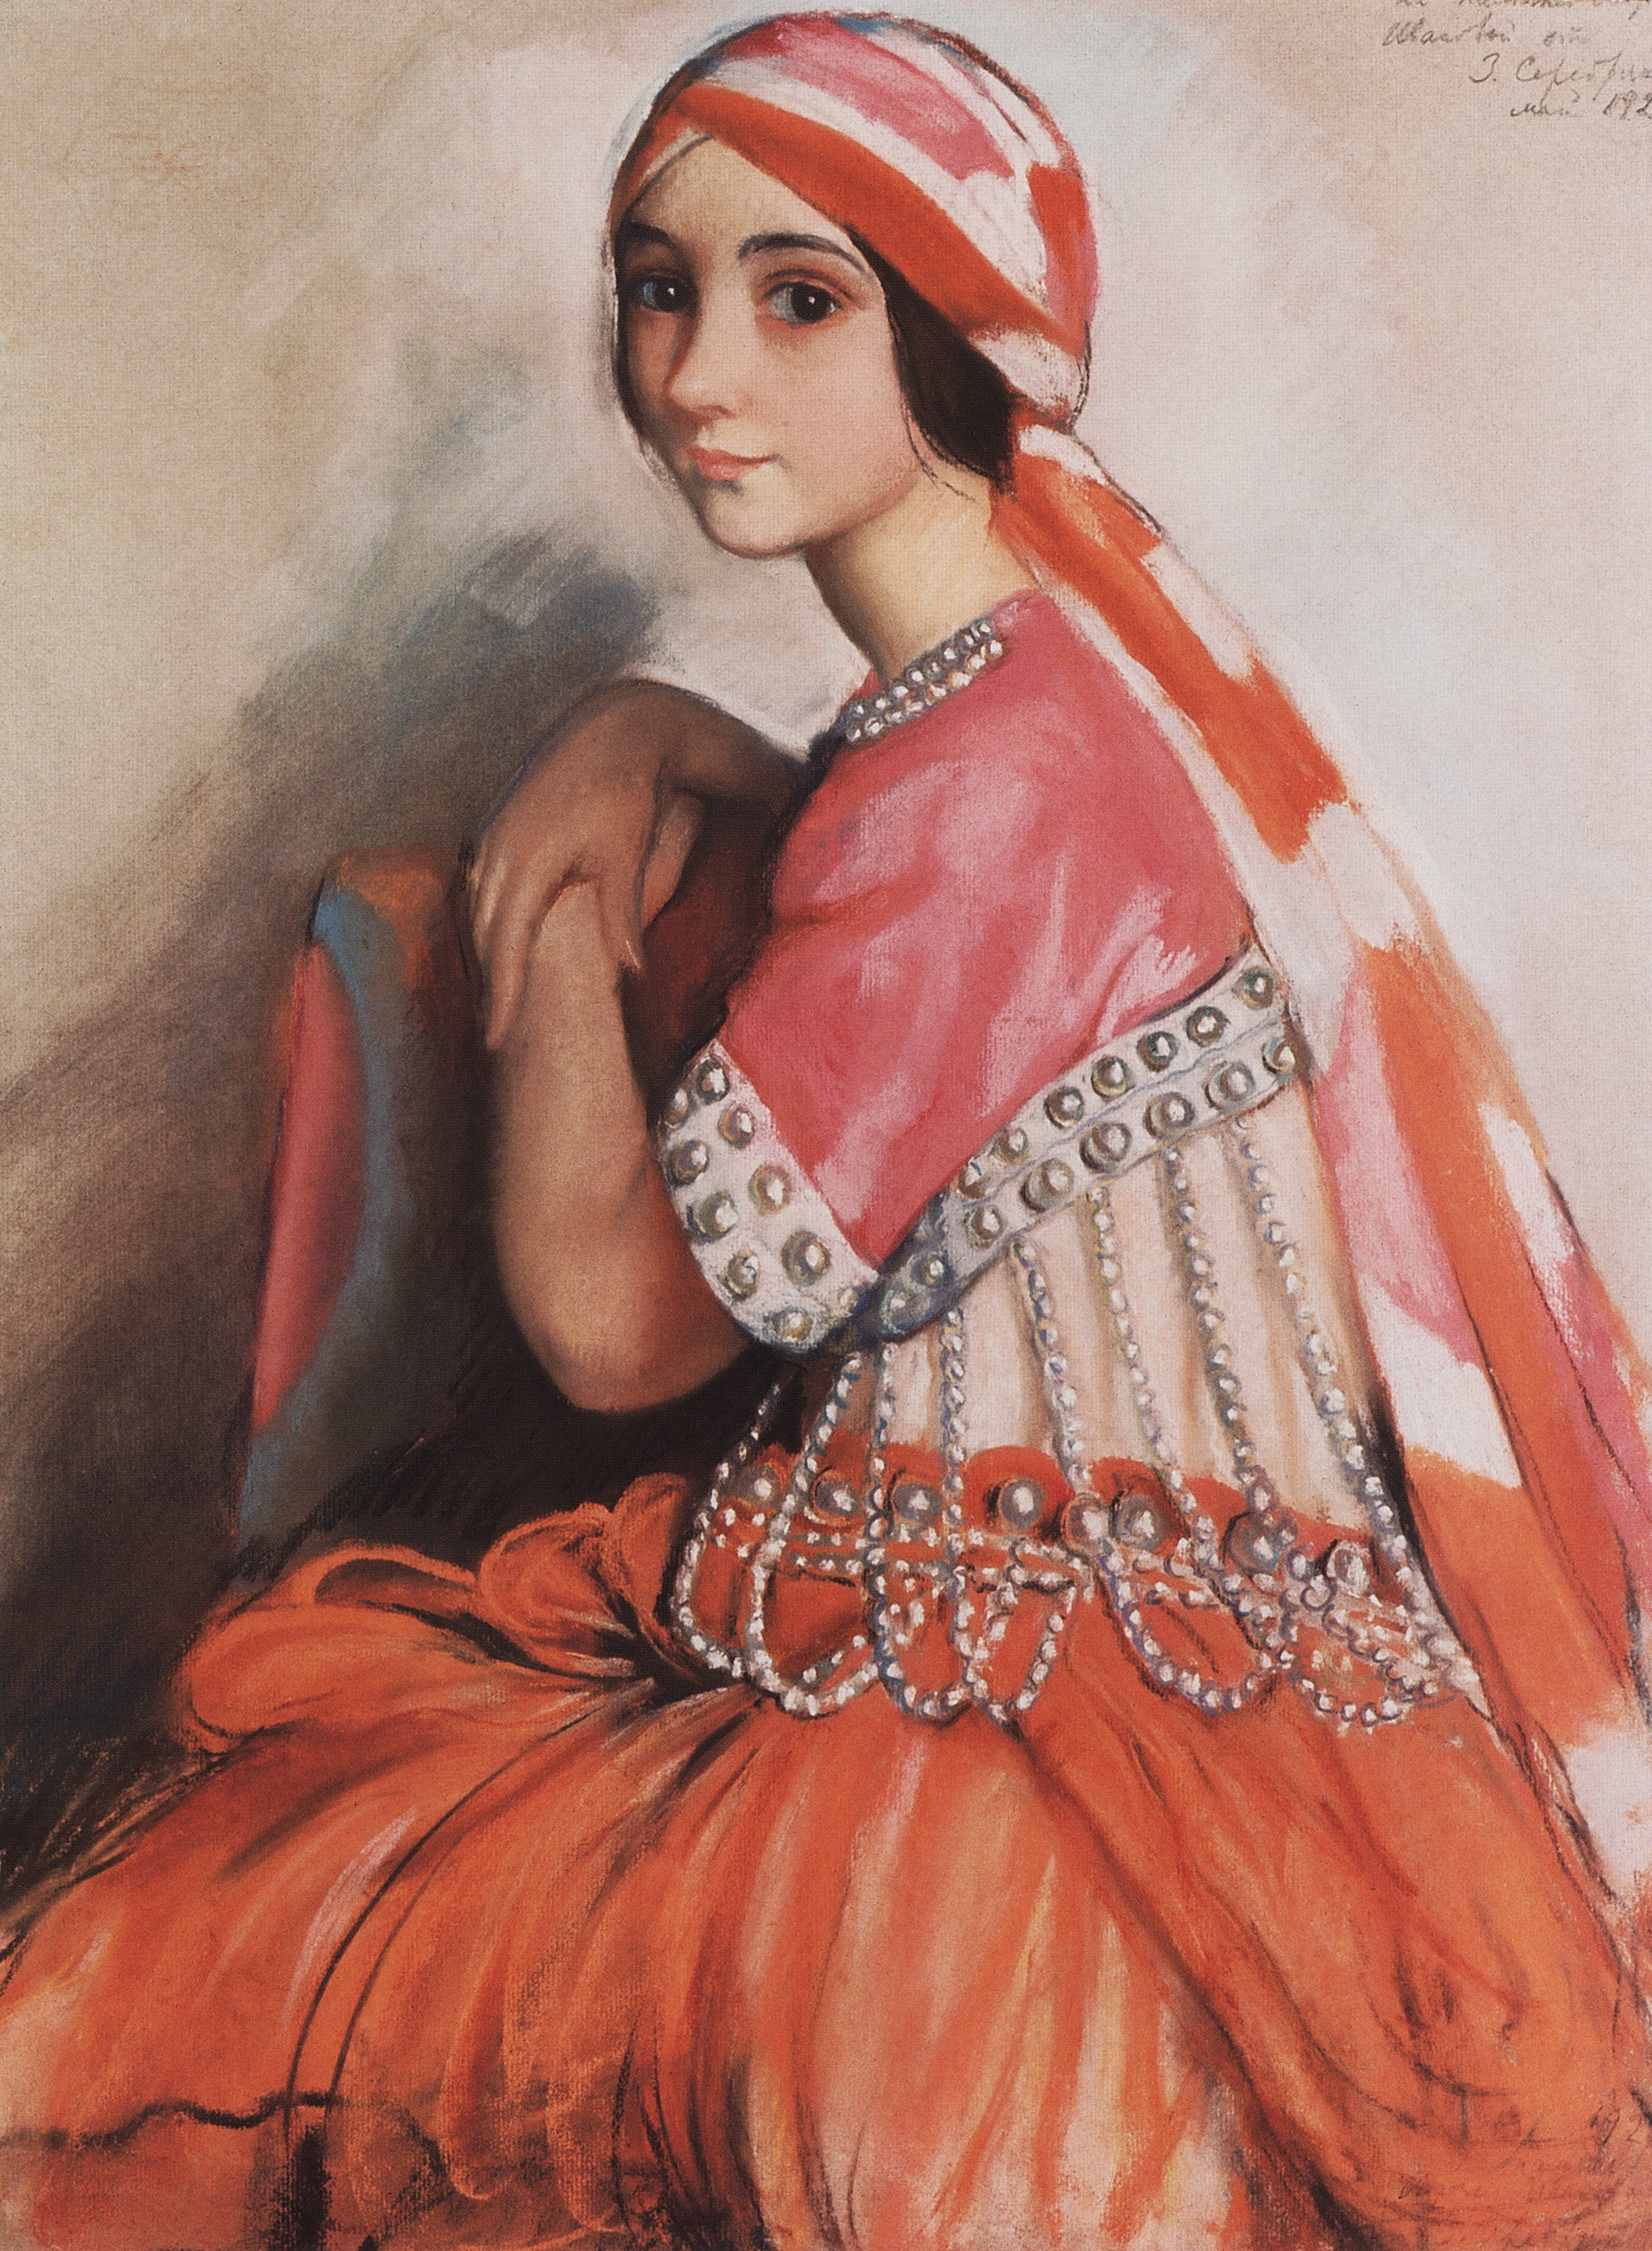 Portrait de la ballerine Lidia Ivanova by Zinaida Serebryakova - 1922 